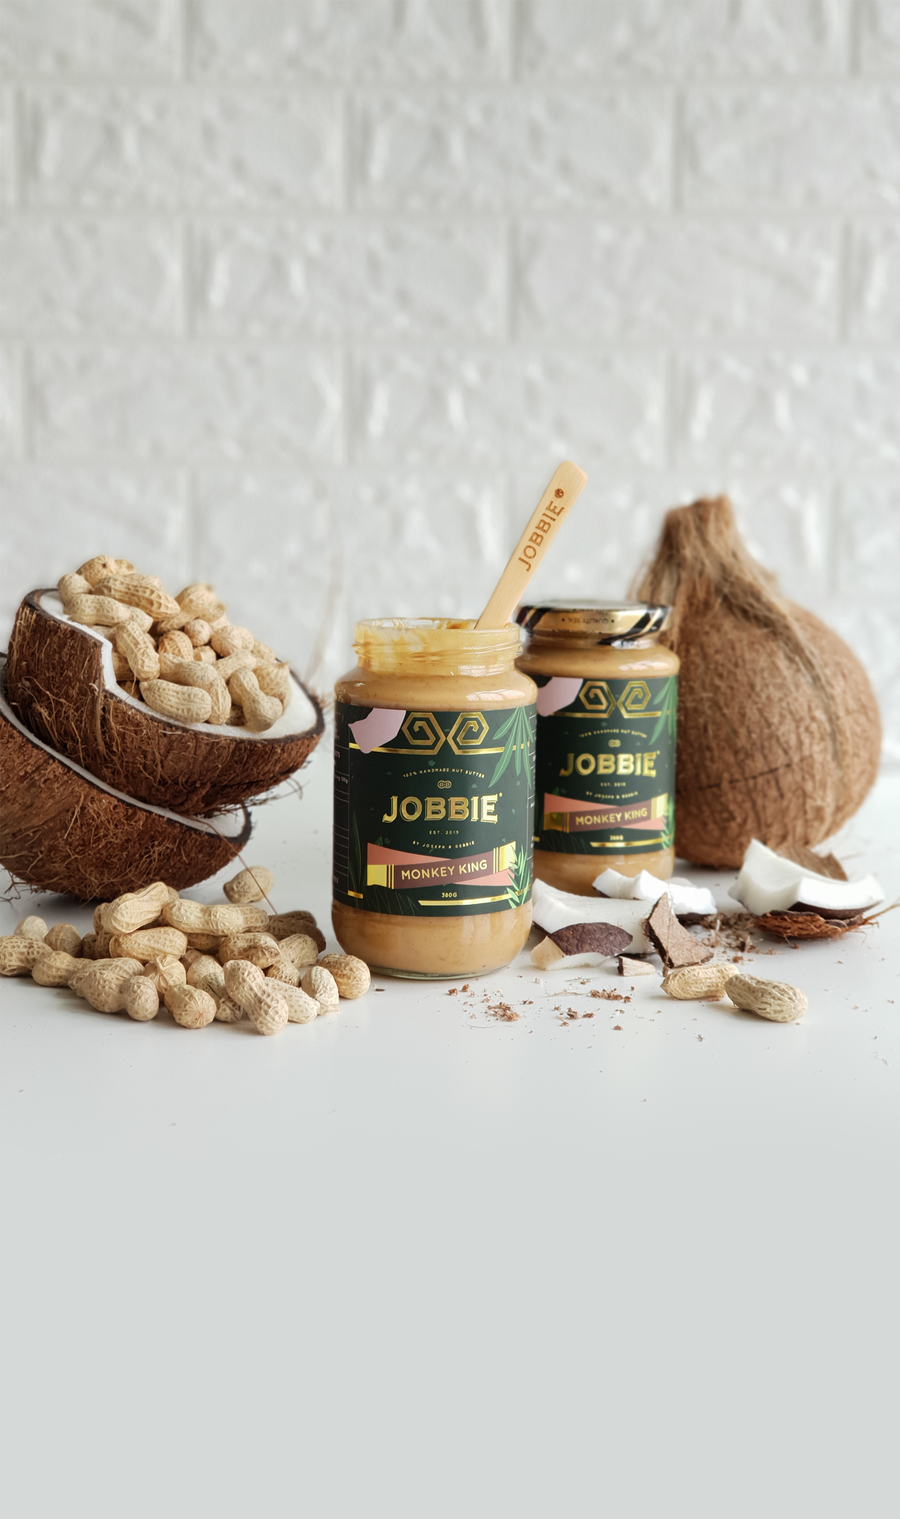 JOBBIE NUT BUTTER - Best Natural Peanut Butter in Malaysia | Monkey King Crispy Coconut PB